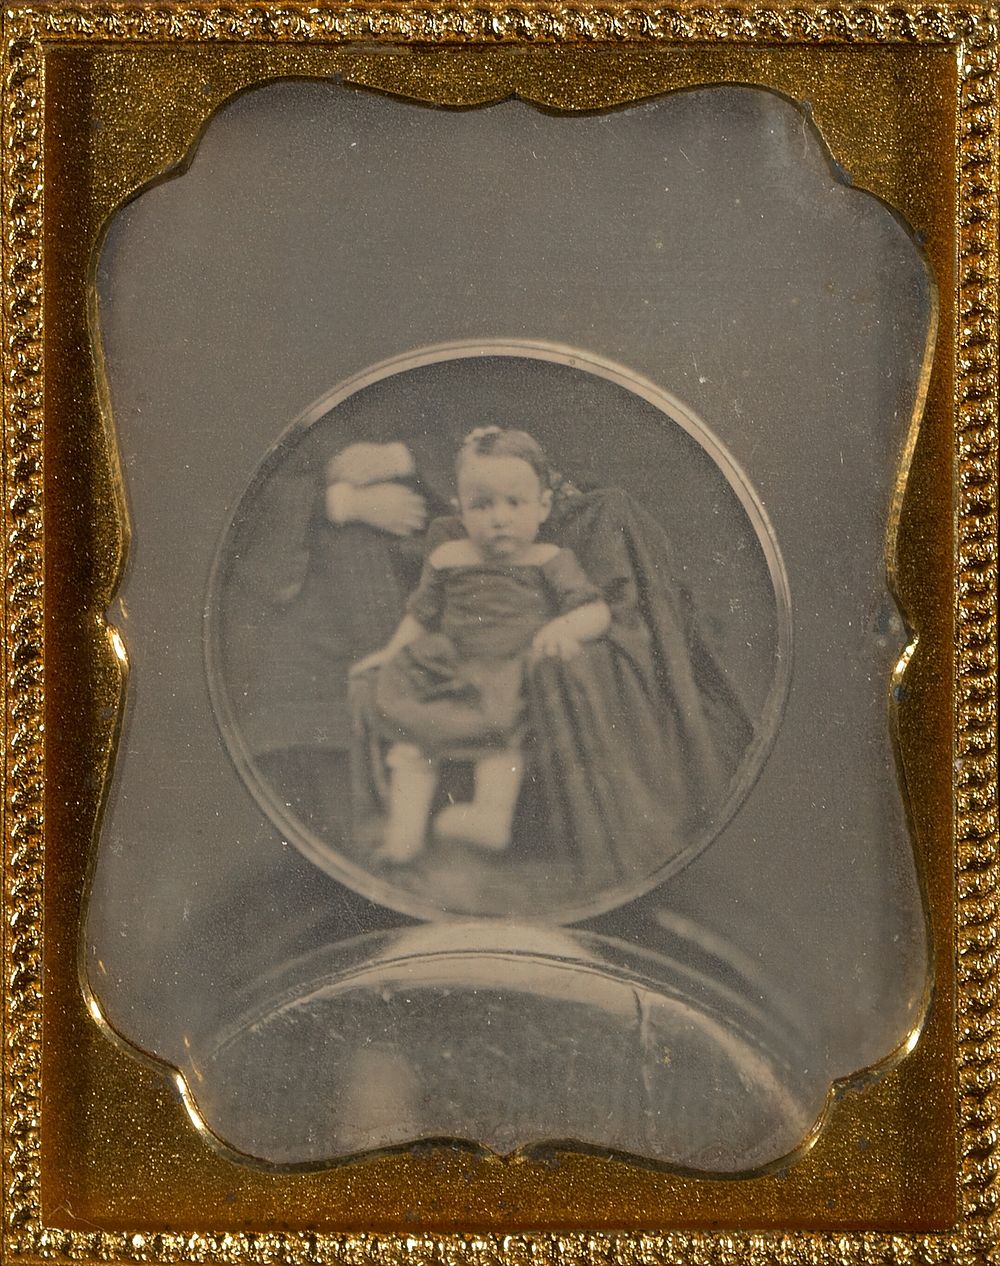 Copy daguerreotype of a circular daguerreotype portrait of a child